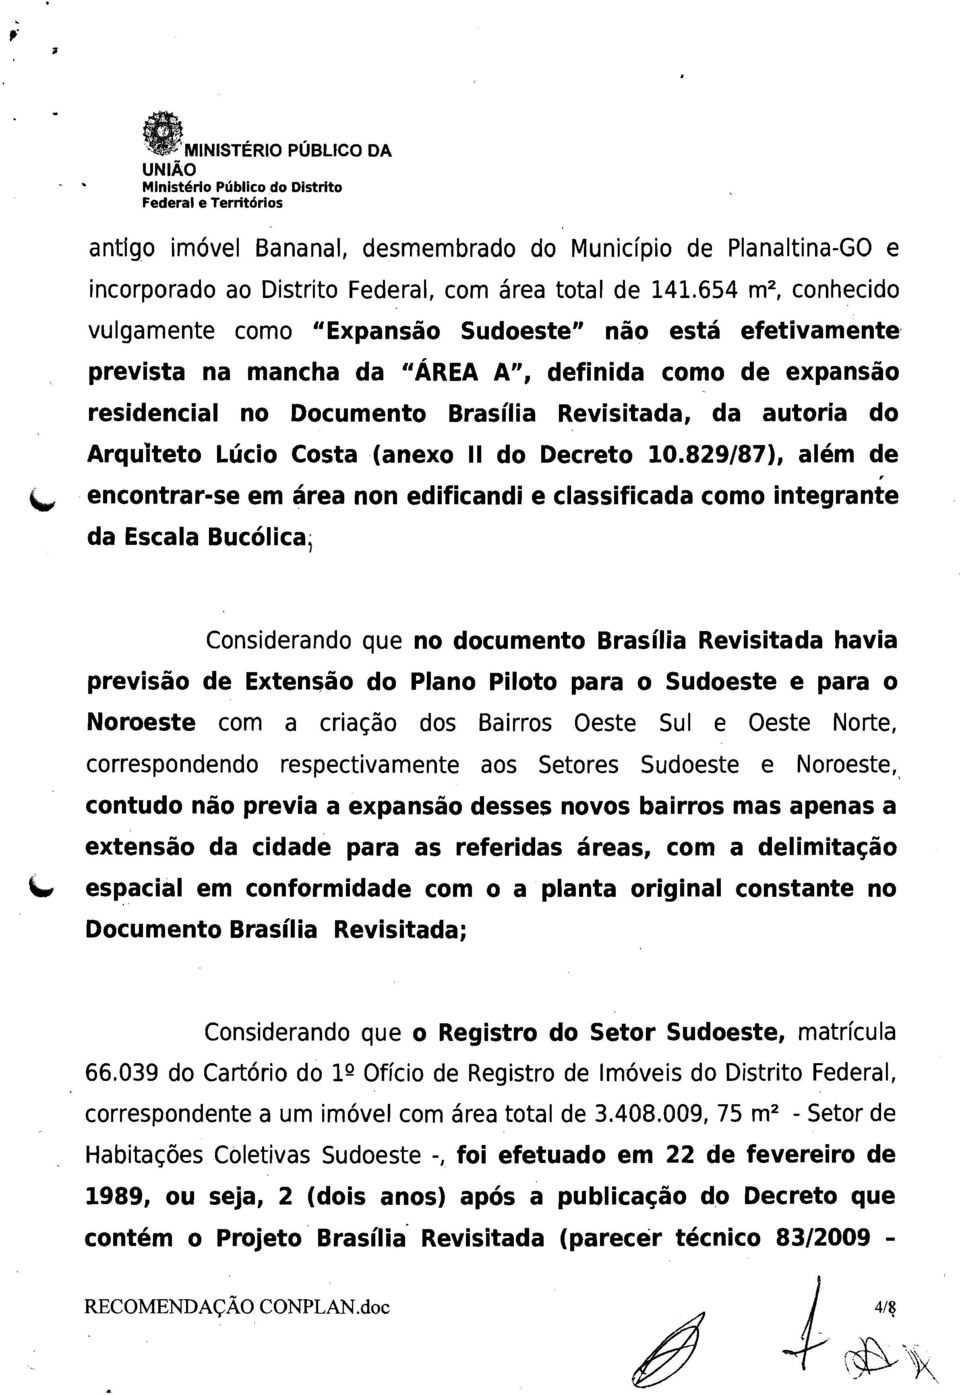 Arquiteto Lúcio Costa (anexo 11 do Decreto 10.